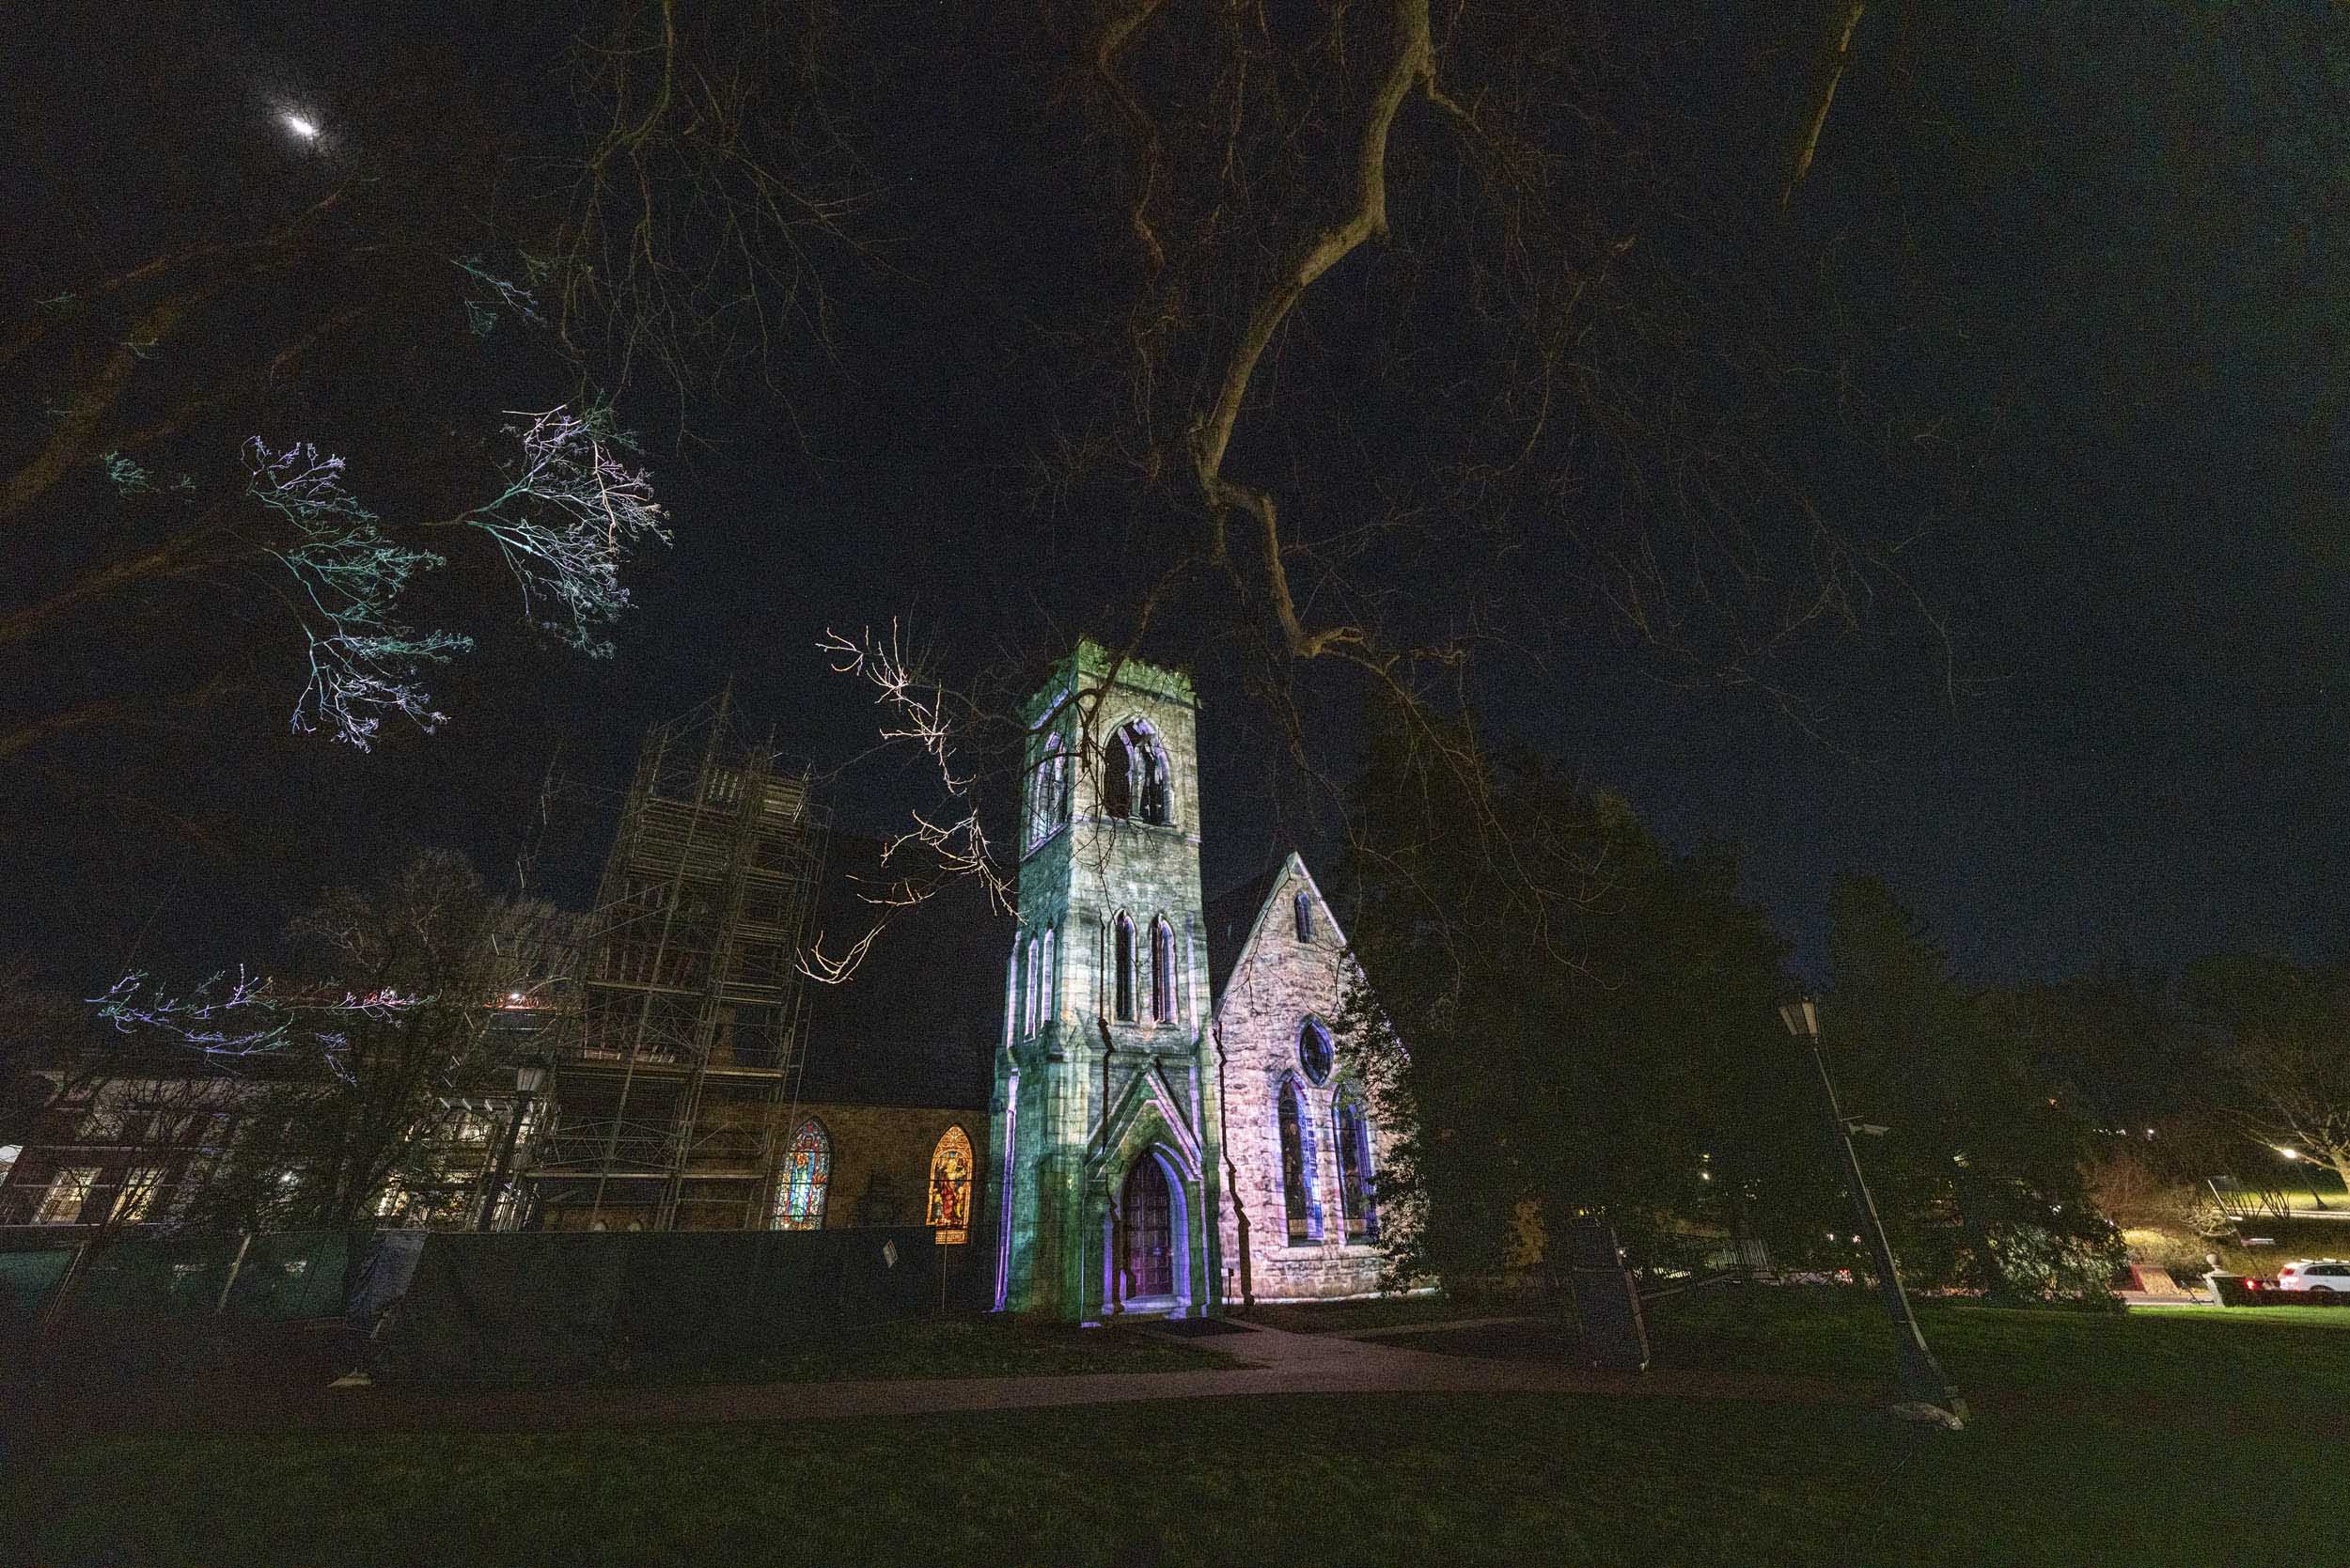 UVA chapel lit up by white lights at night